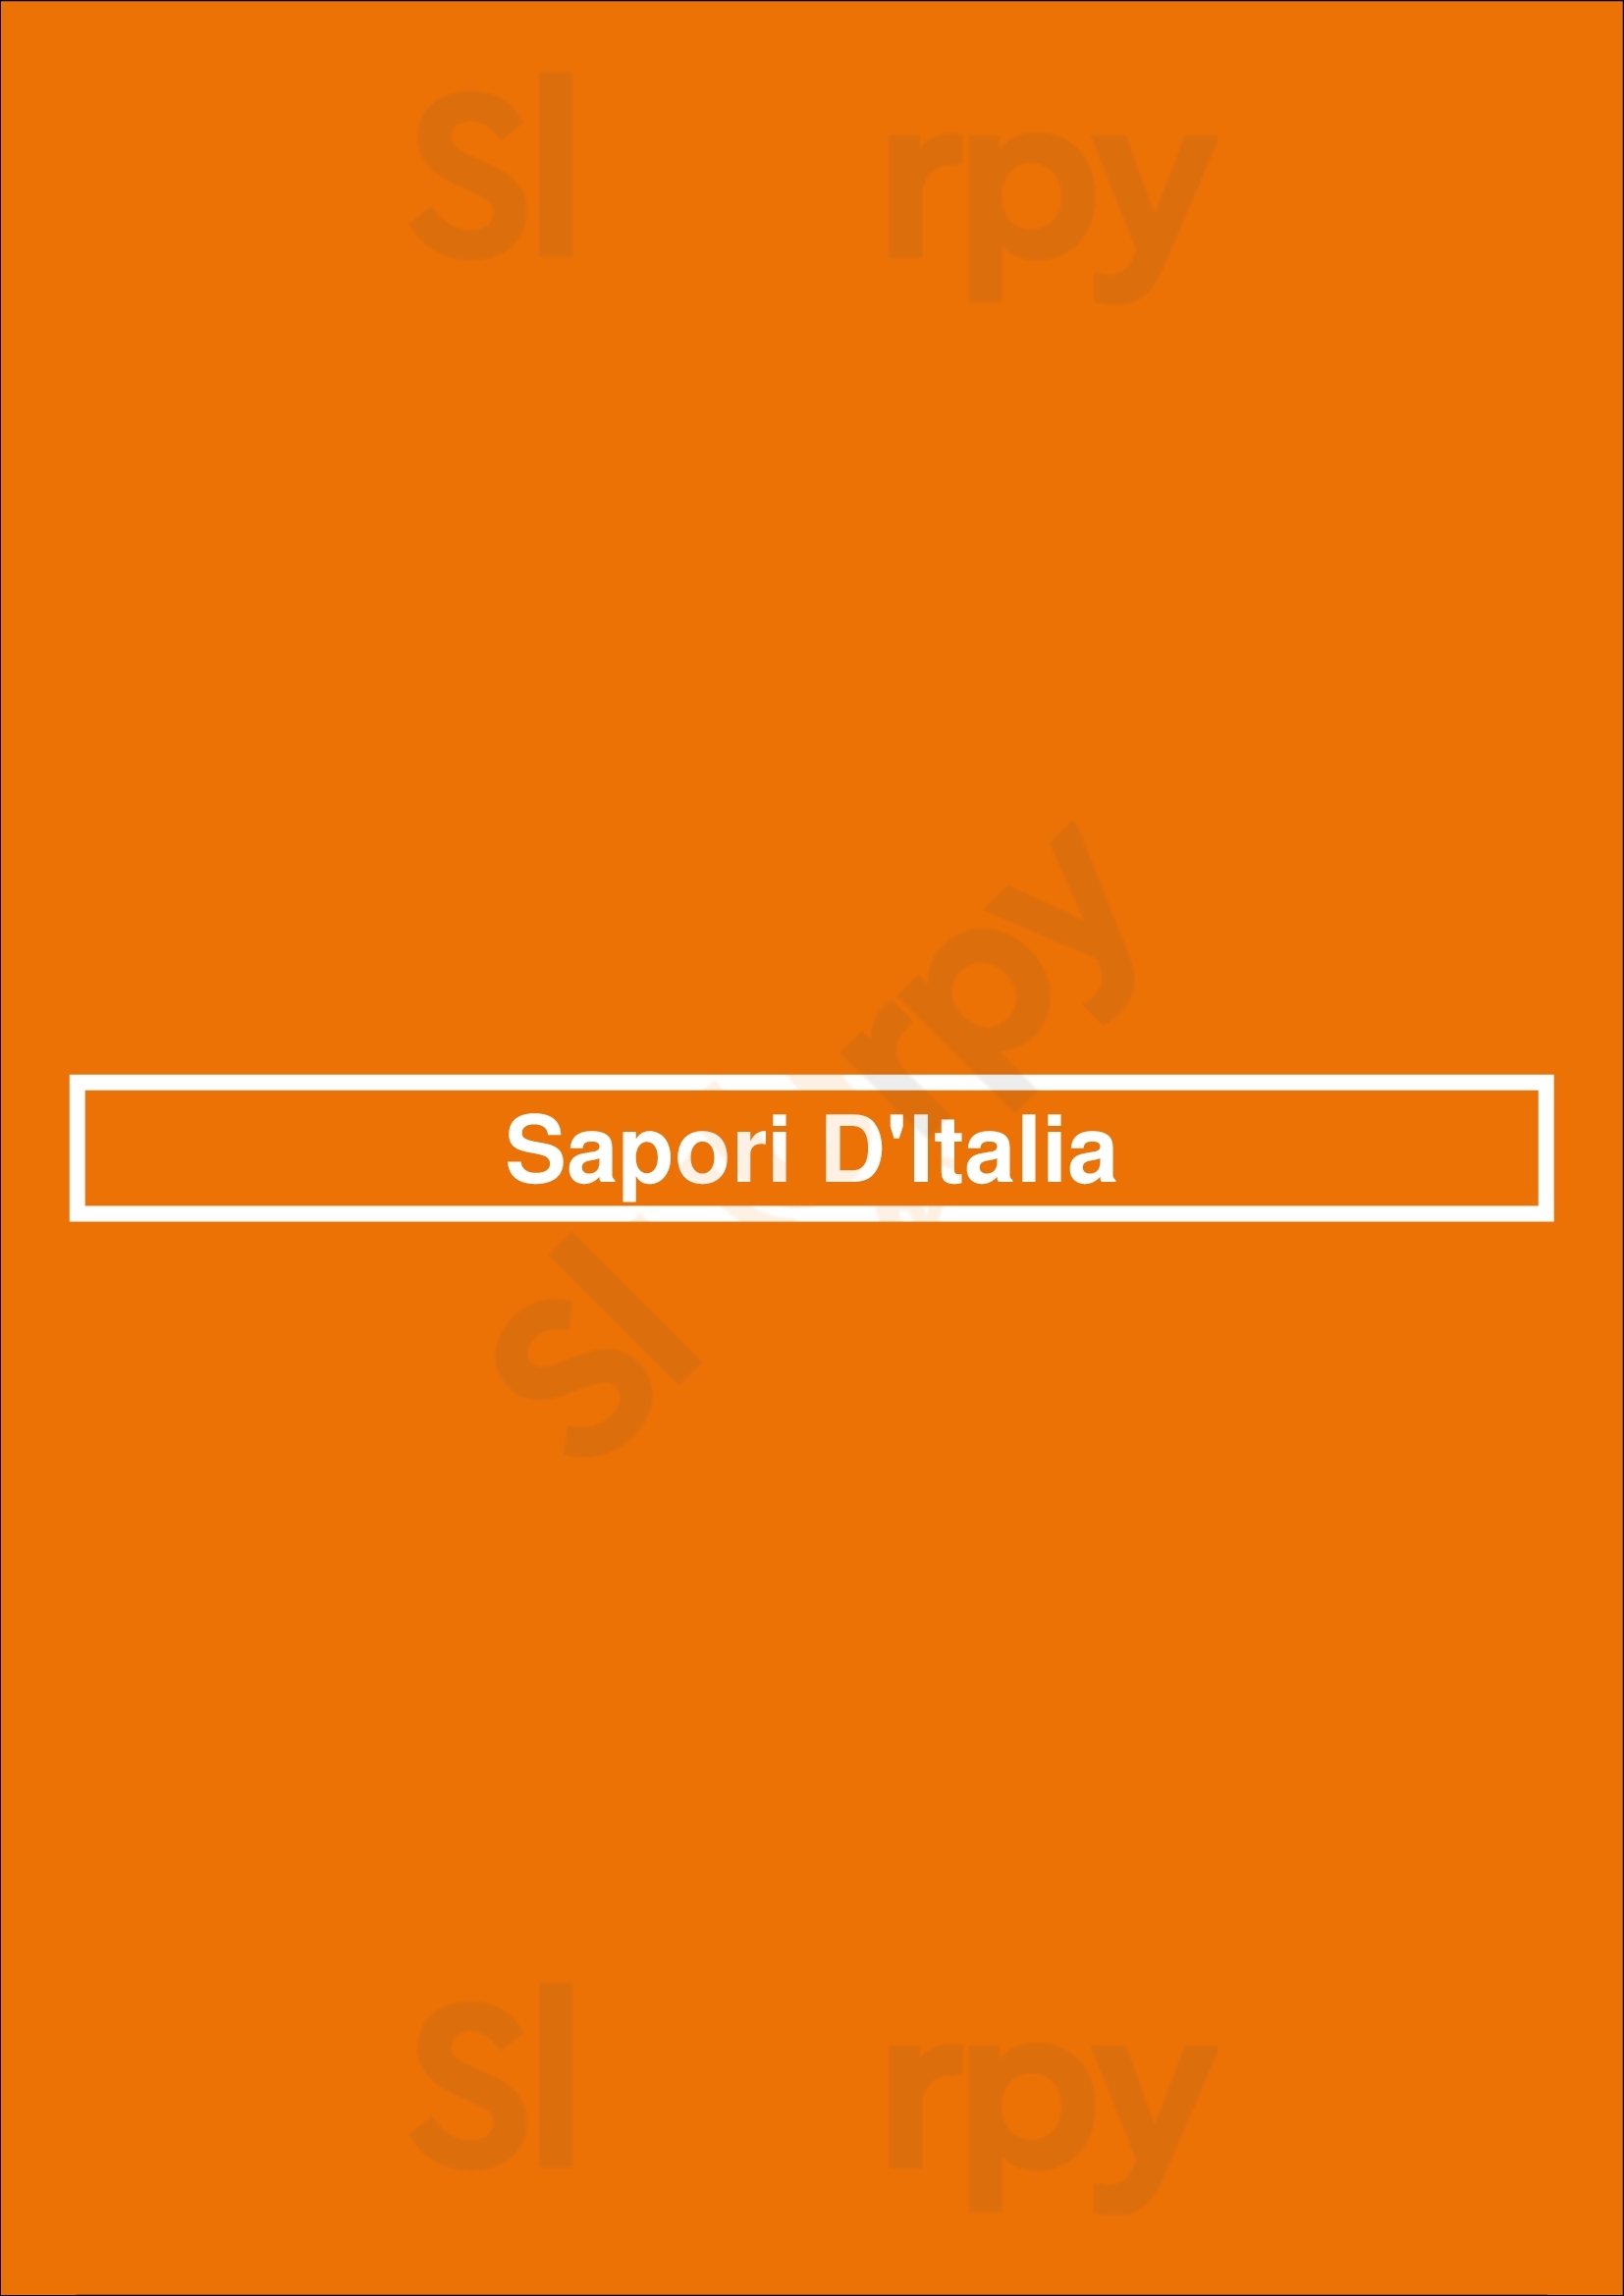 Sapori D'italia Den Haag Menu - 1